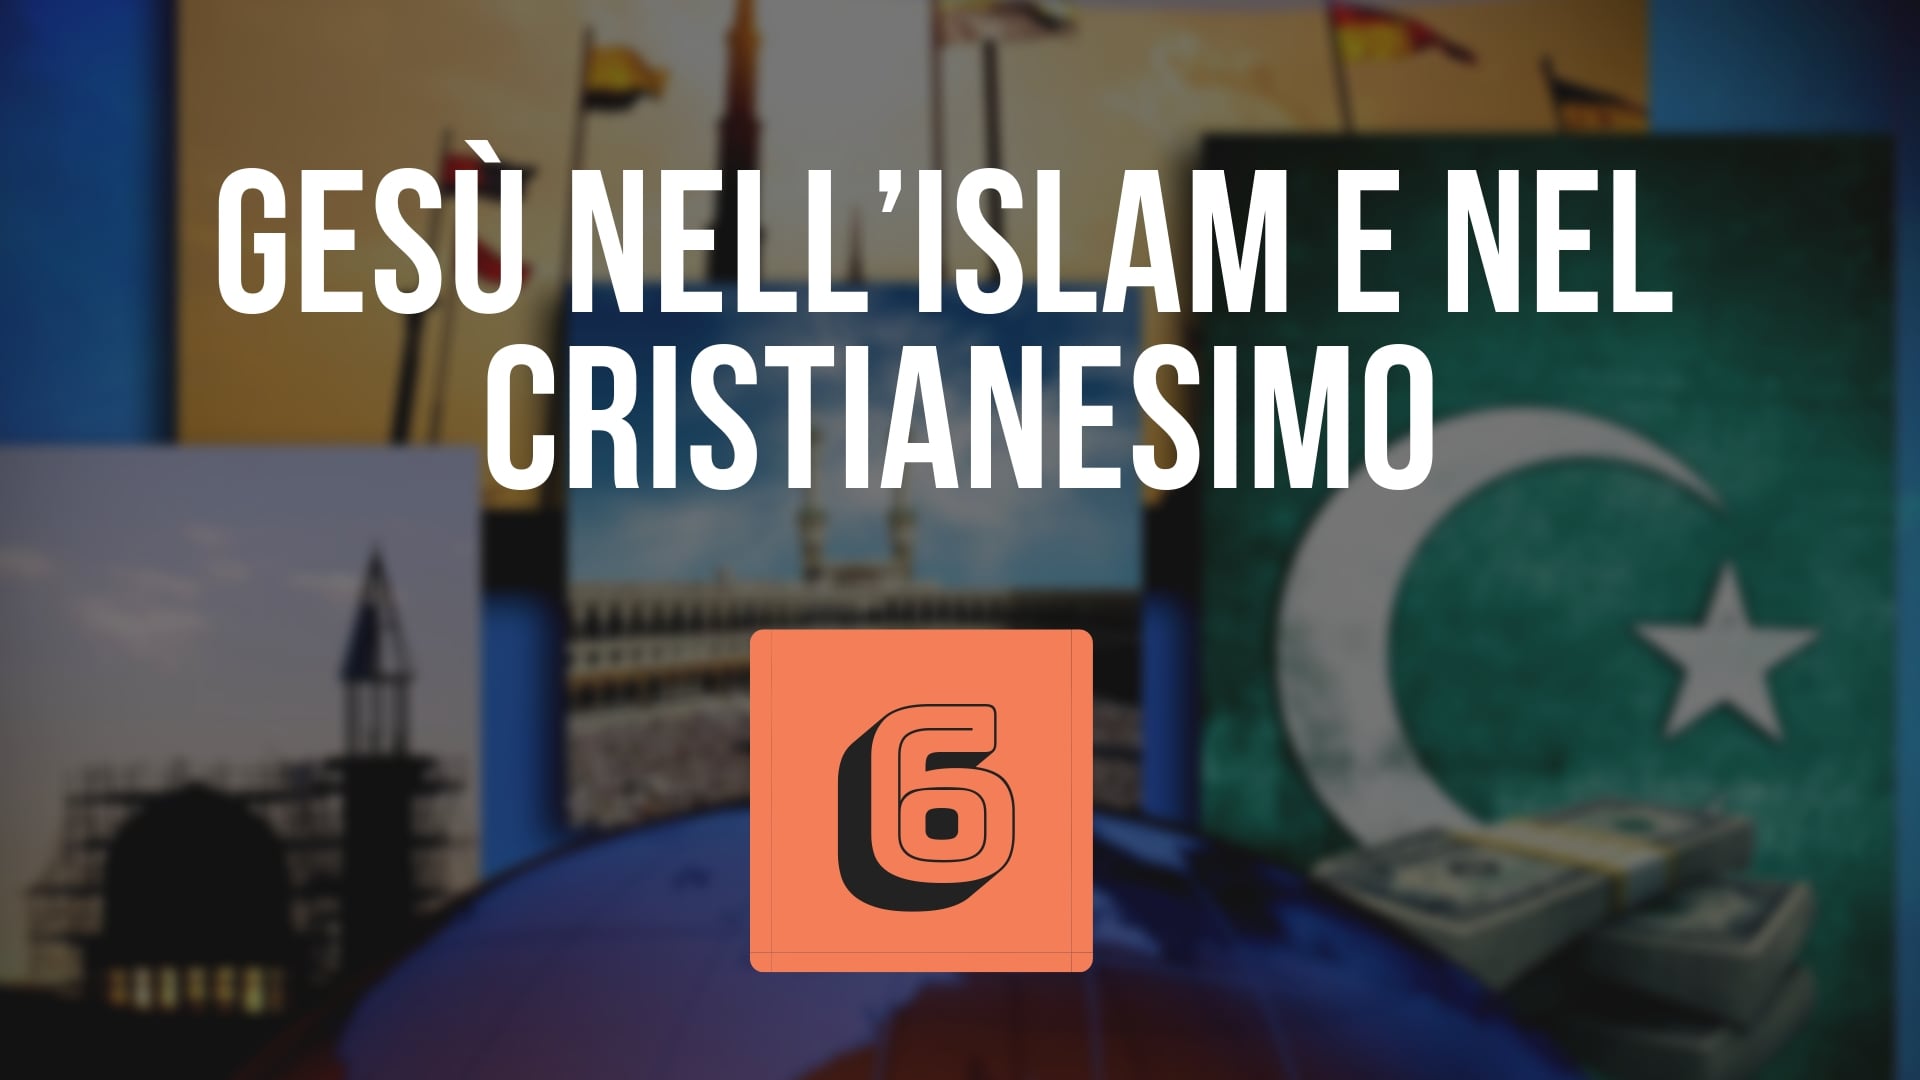 Gesù nell’Islam e nel Cristianesimo